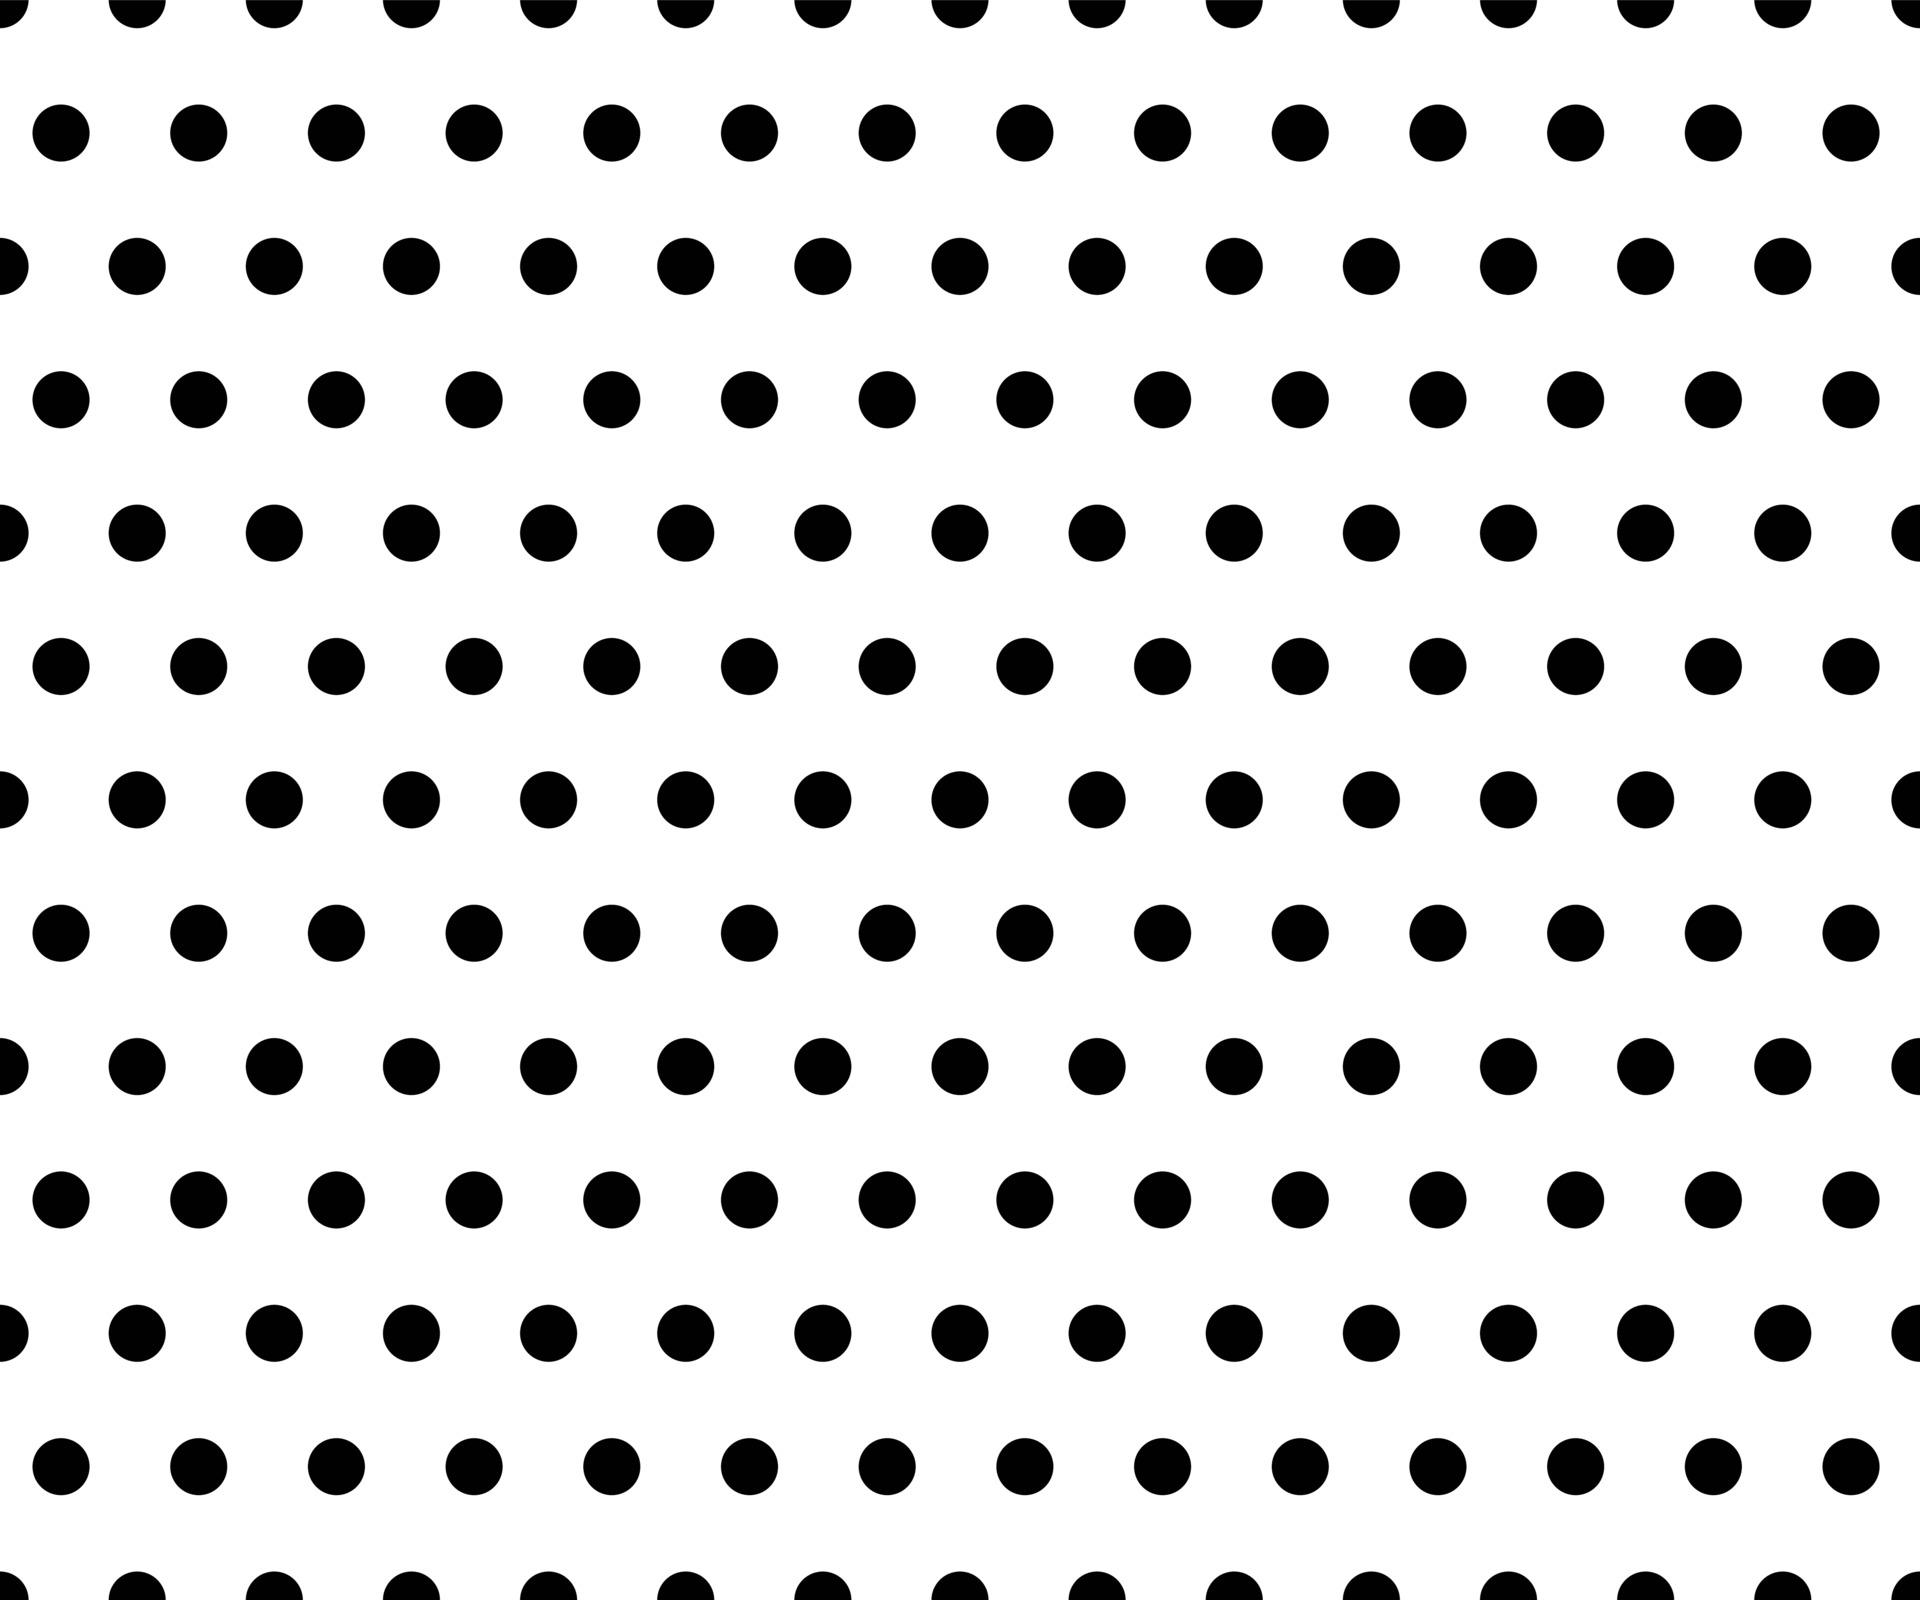 10. Black and White Polka Dot Acrylic Nails - wide 8